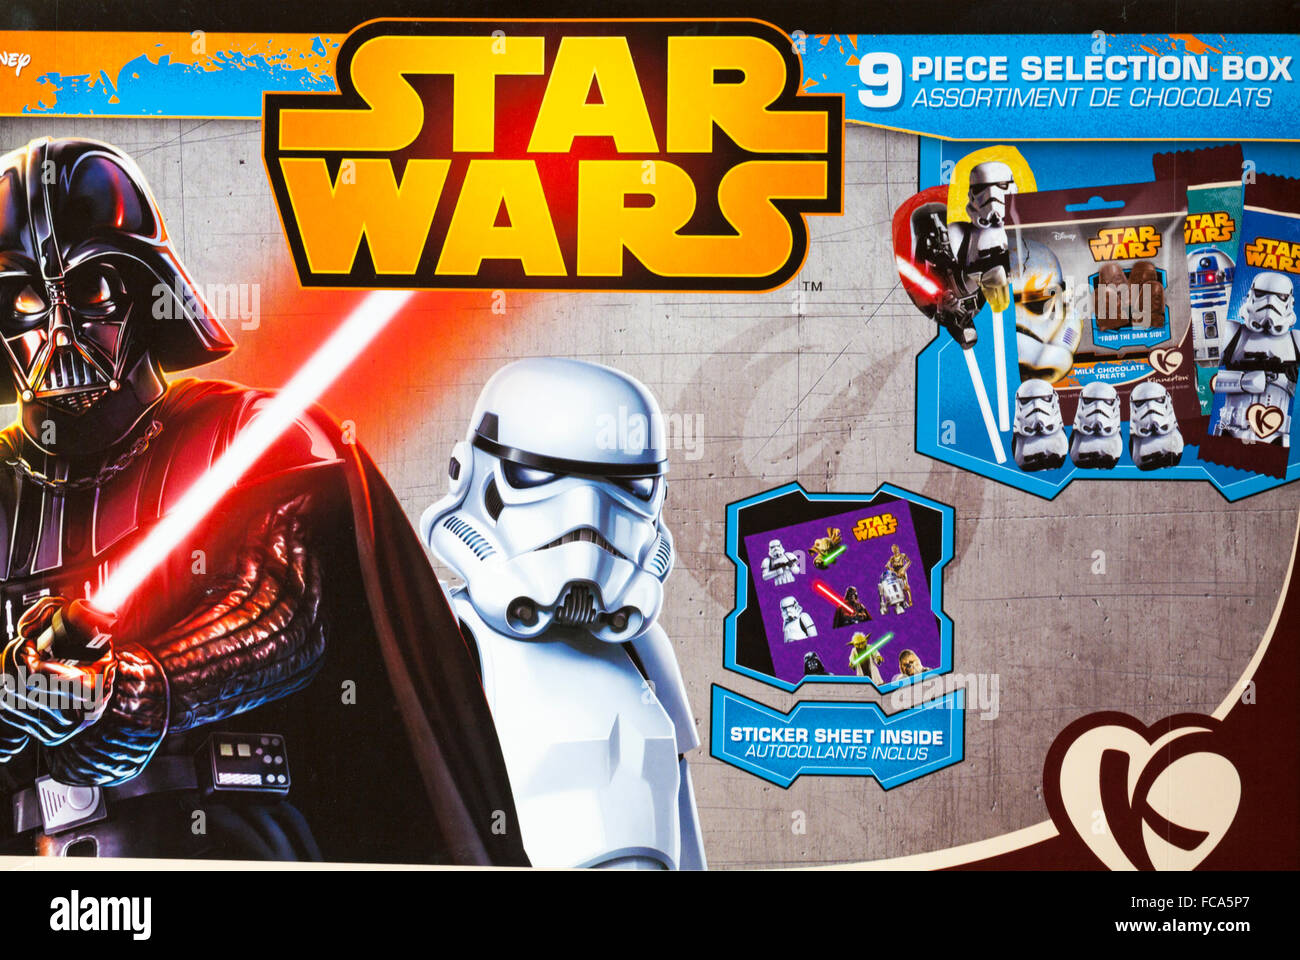 Star Wars 9 piece selection box chocolates from Kinnerton Stock Photo